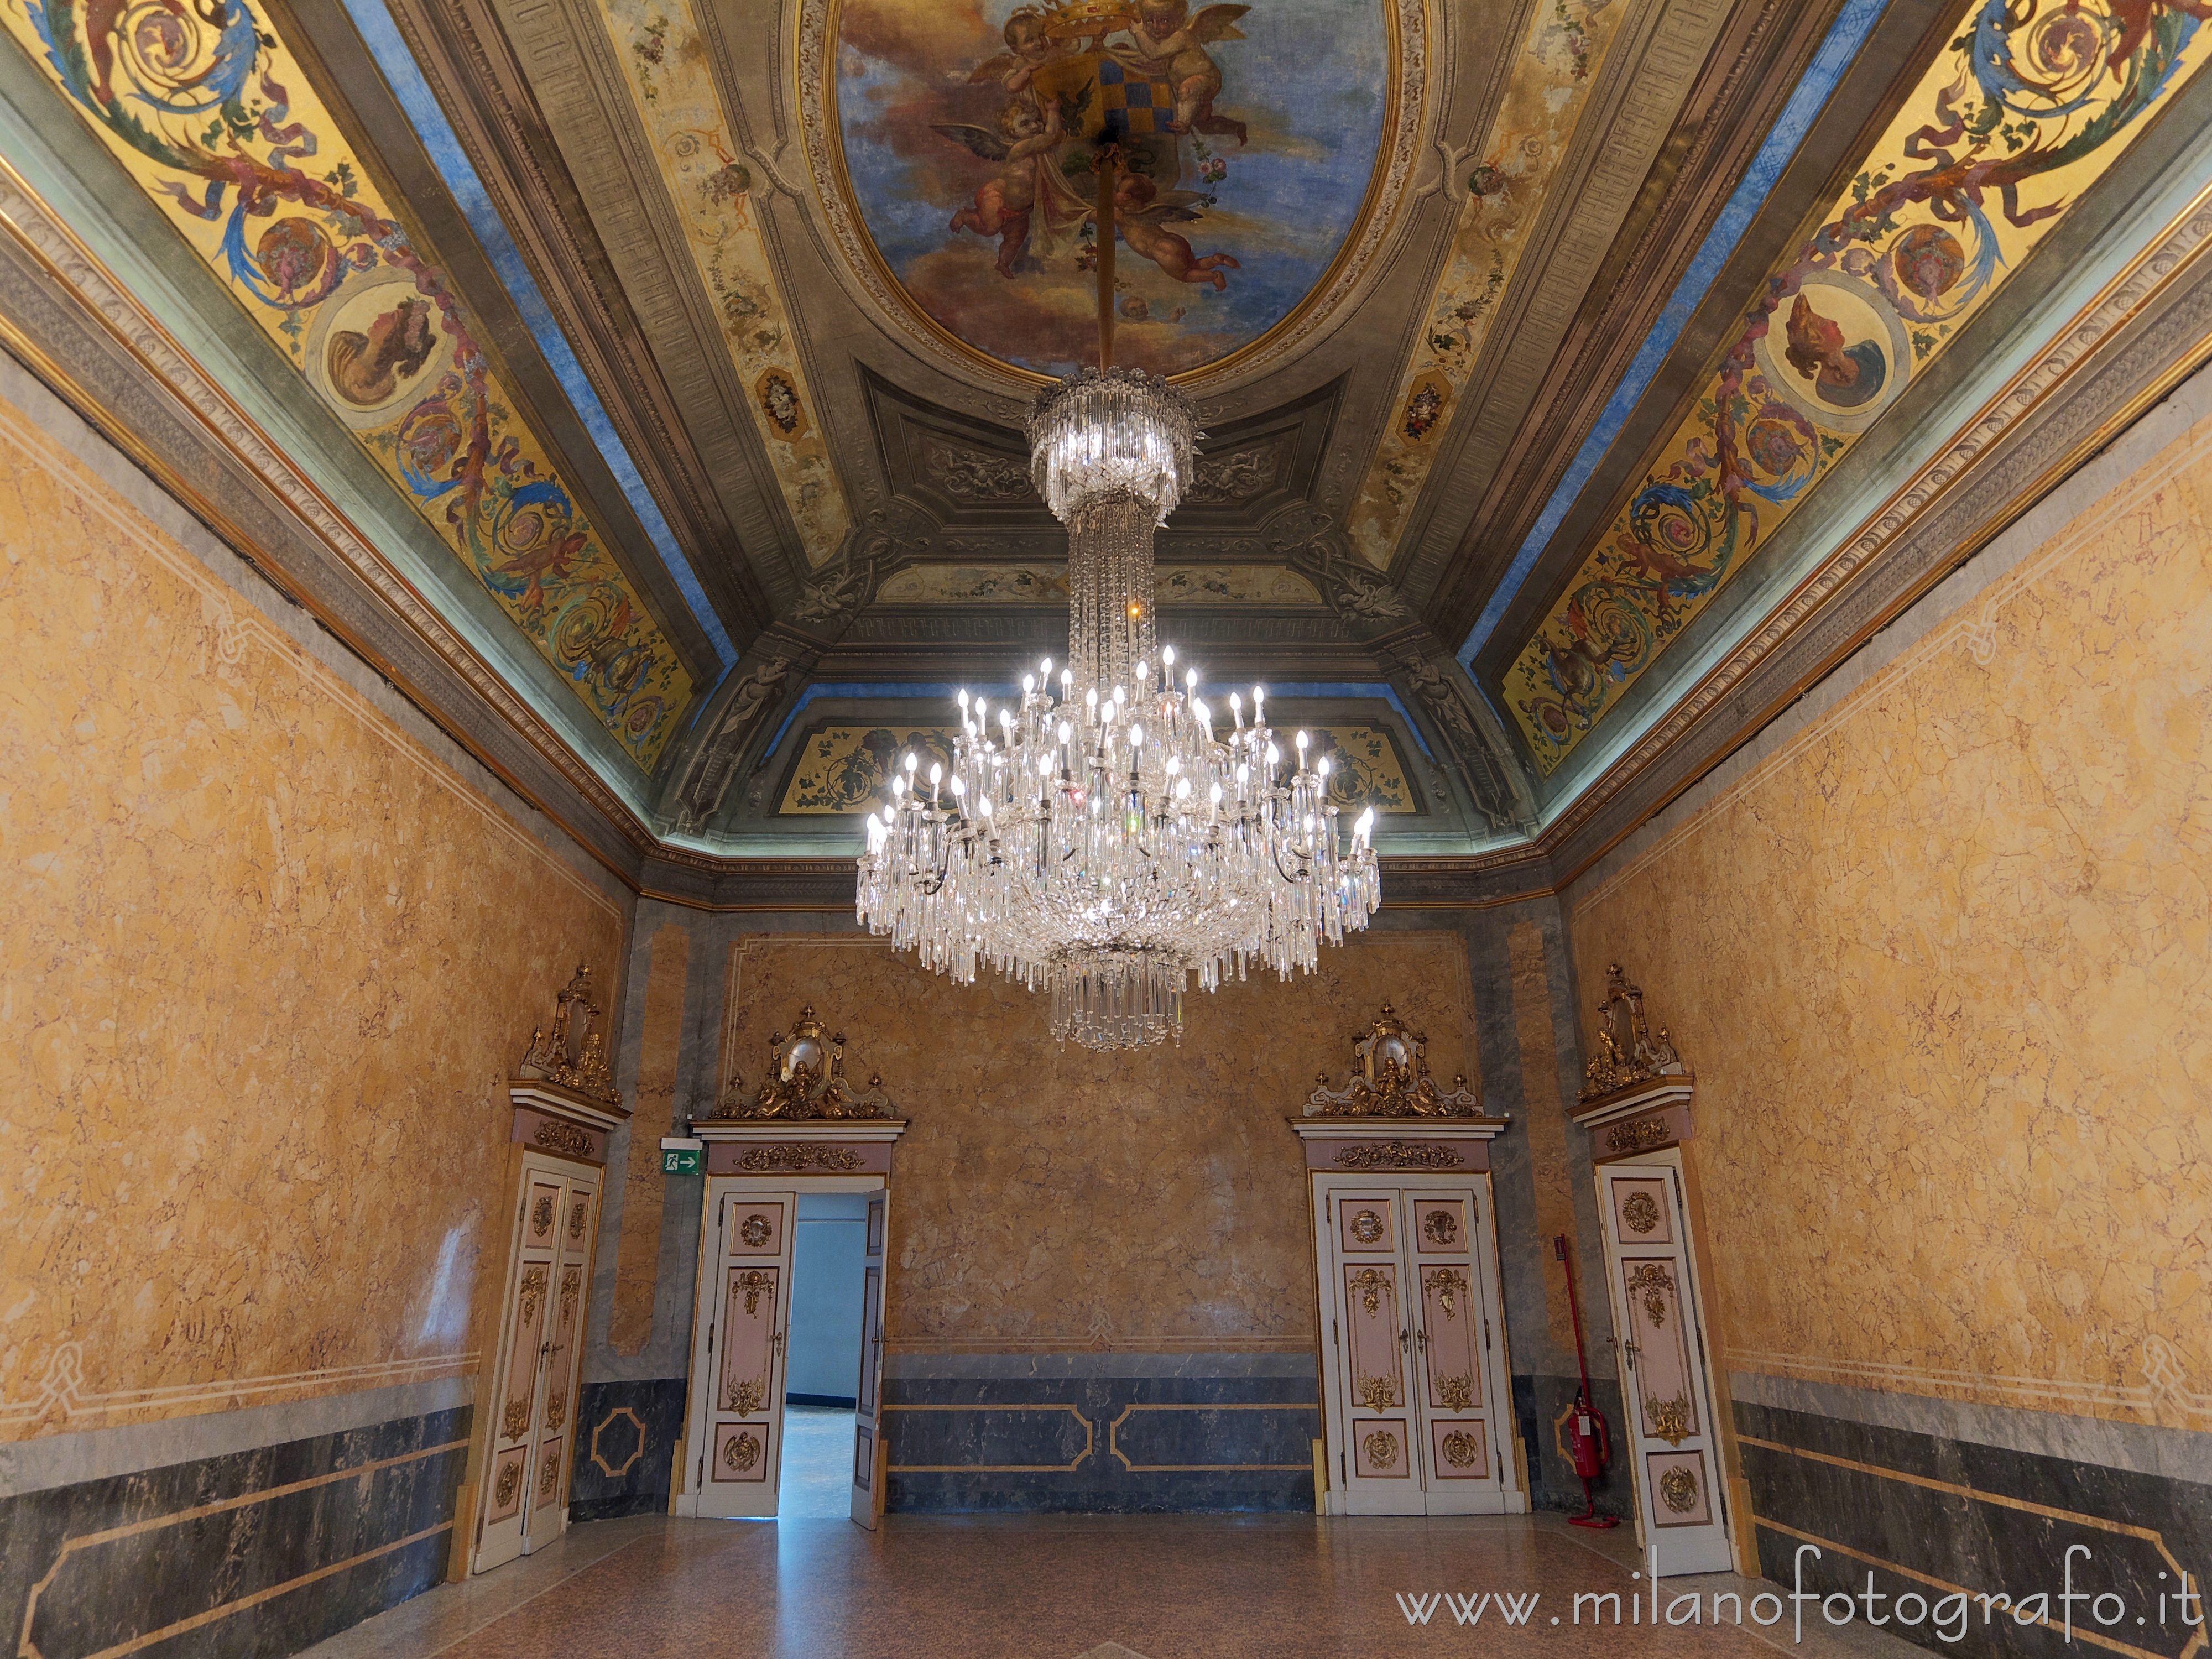 Milan (Italy): Beauharnais Hall in Serbelloni Palace - Milan (Italy)